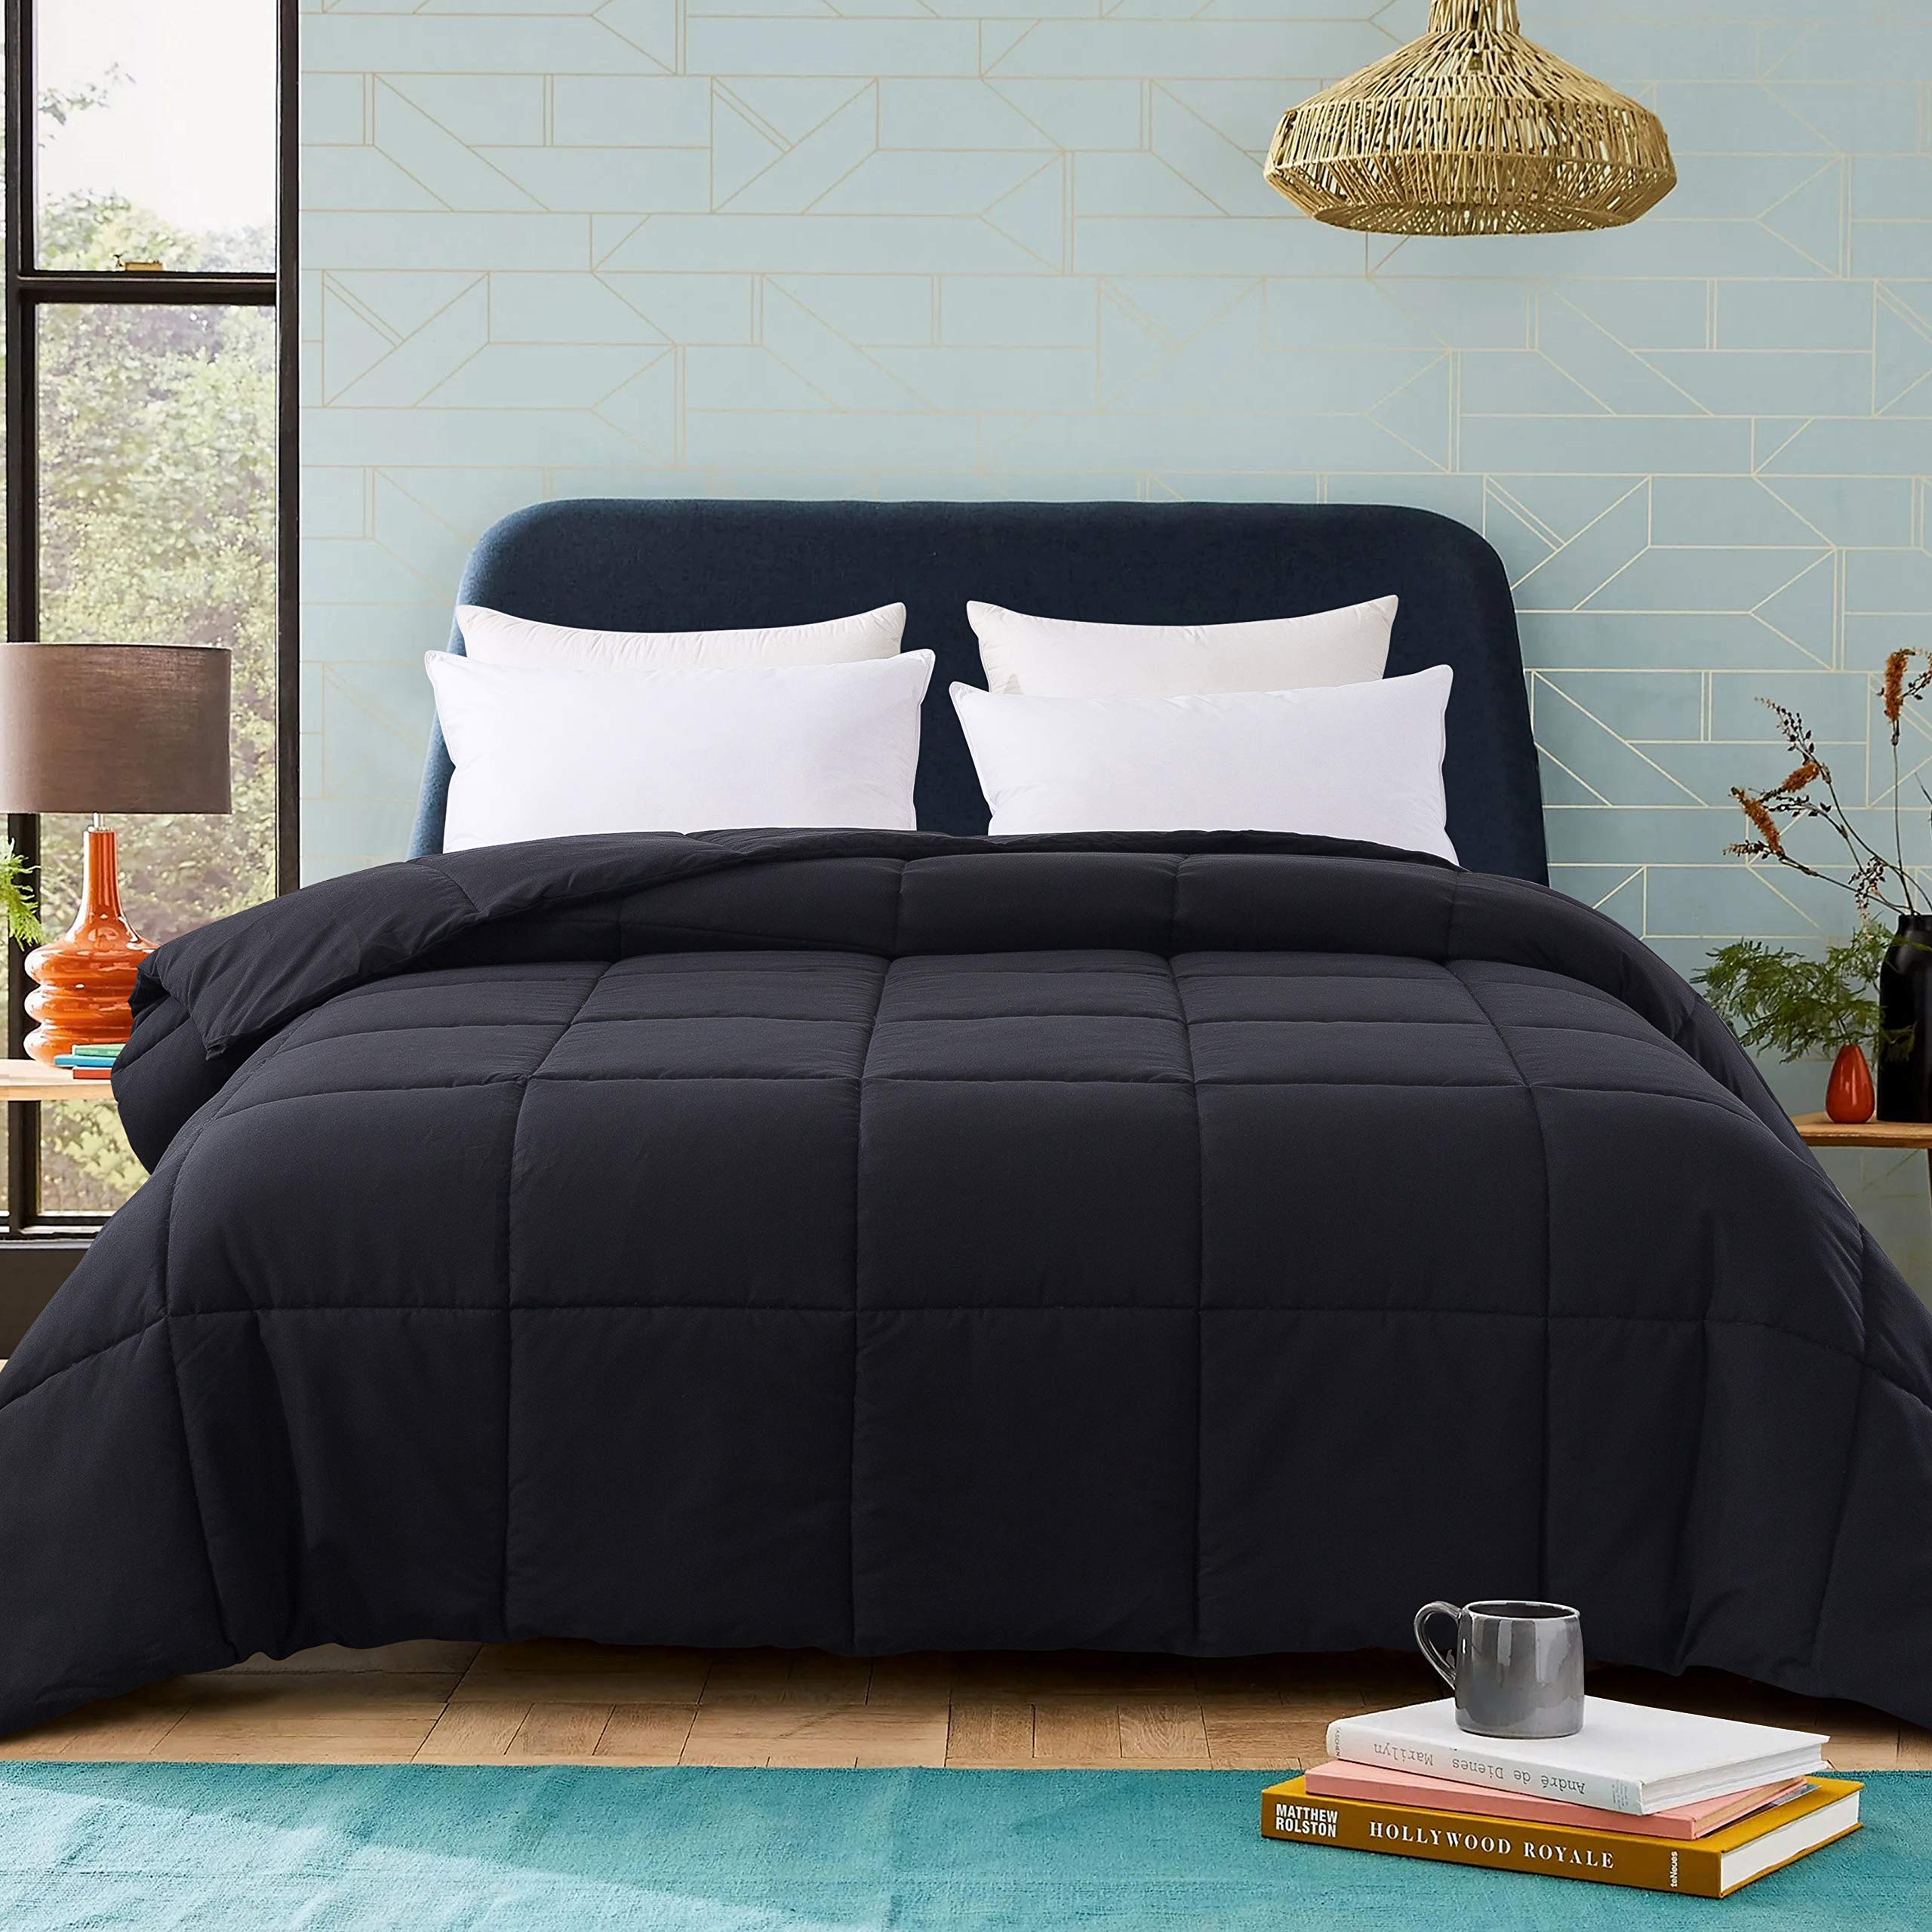 9 Mo Finance Cosybay California King Comforter Black Cal King Size Abunda